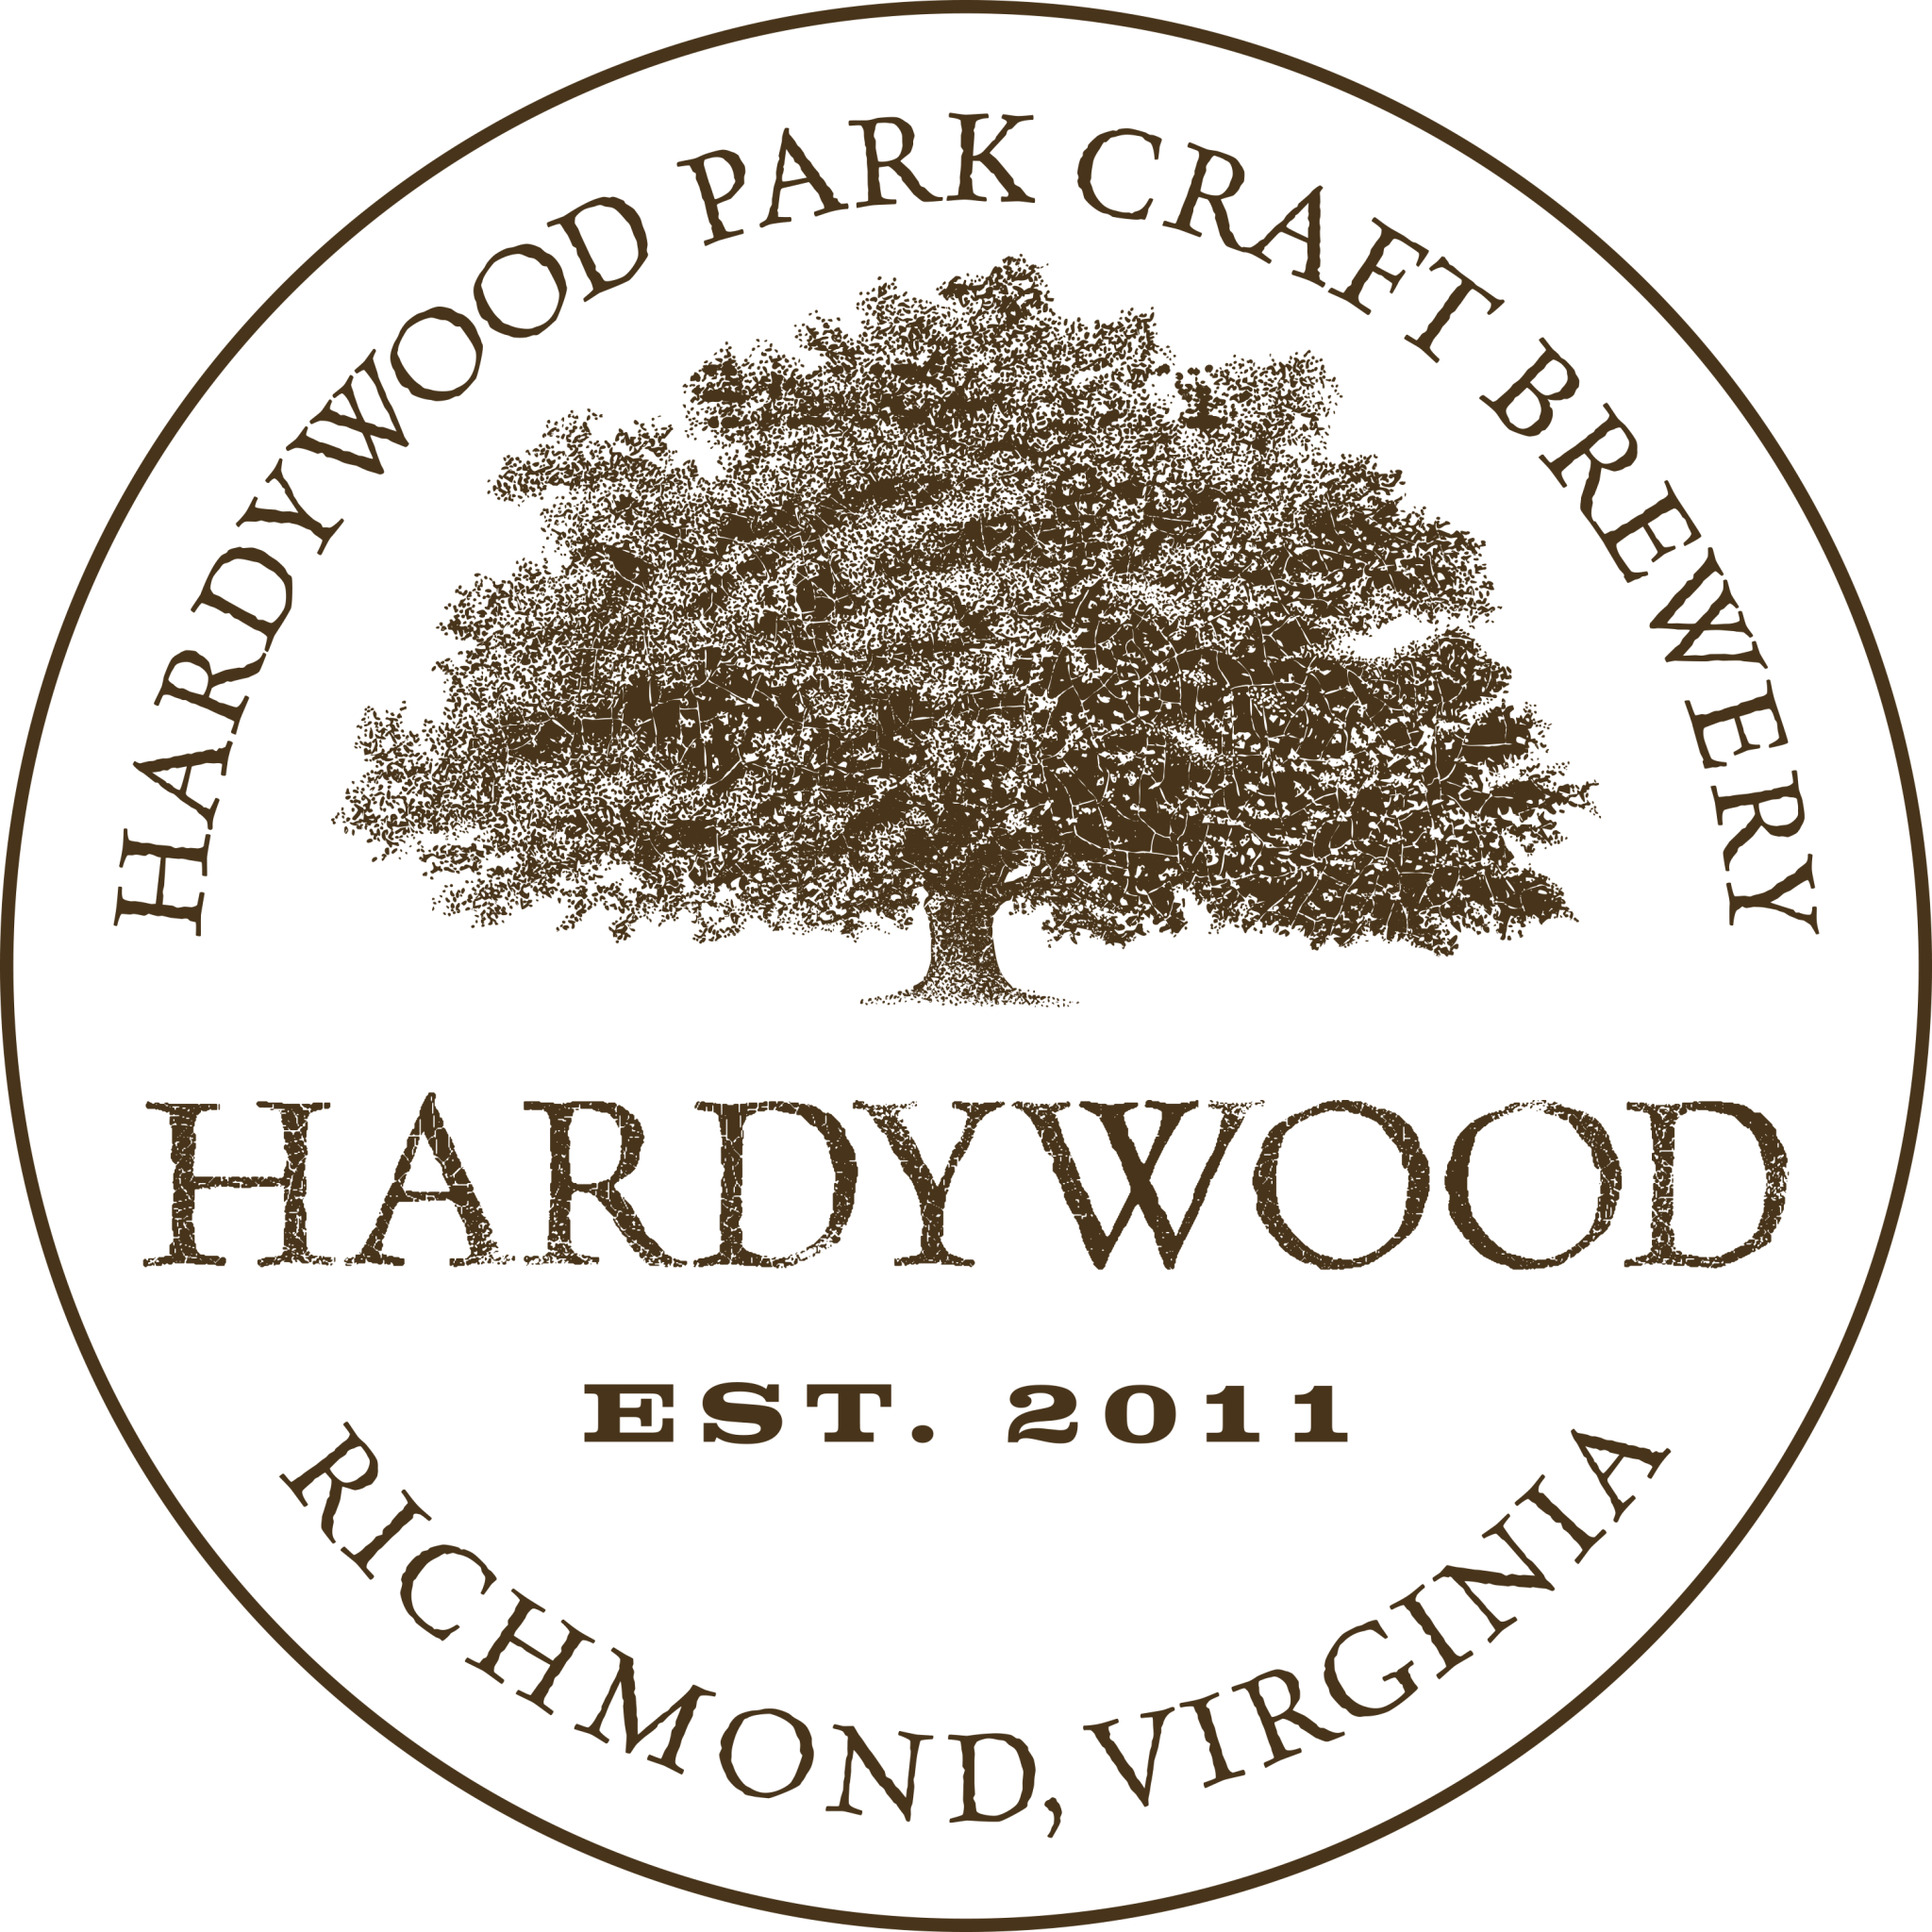 Hardywood Park Craft Brewery logo